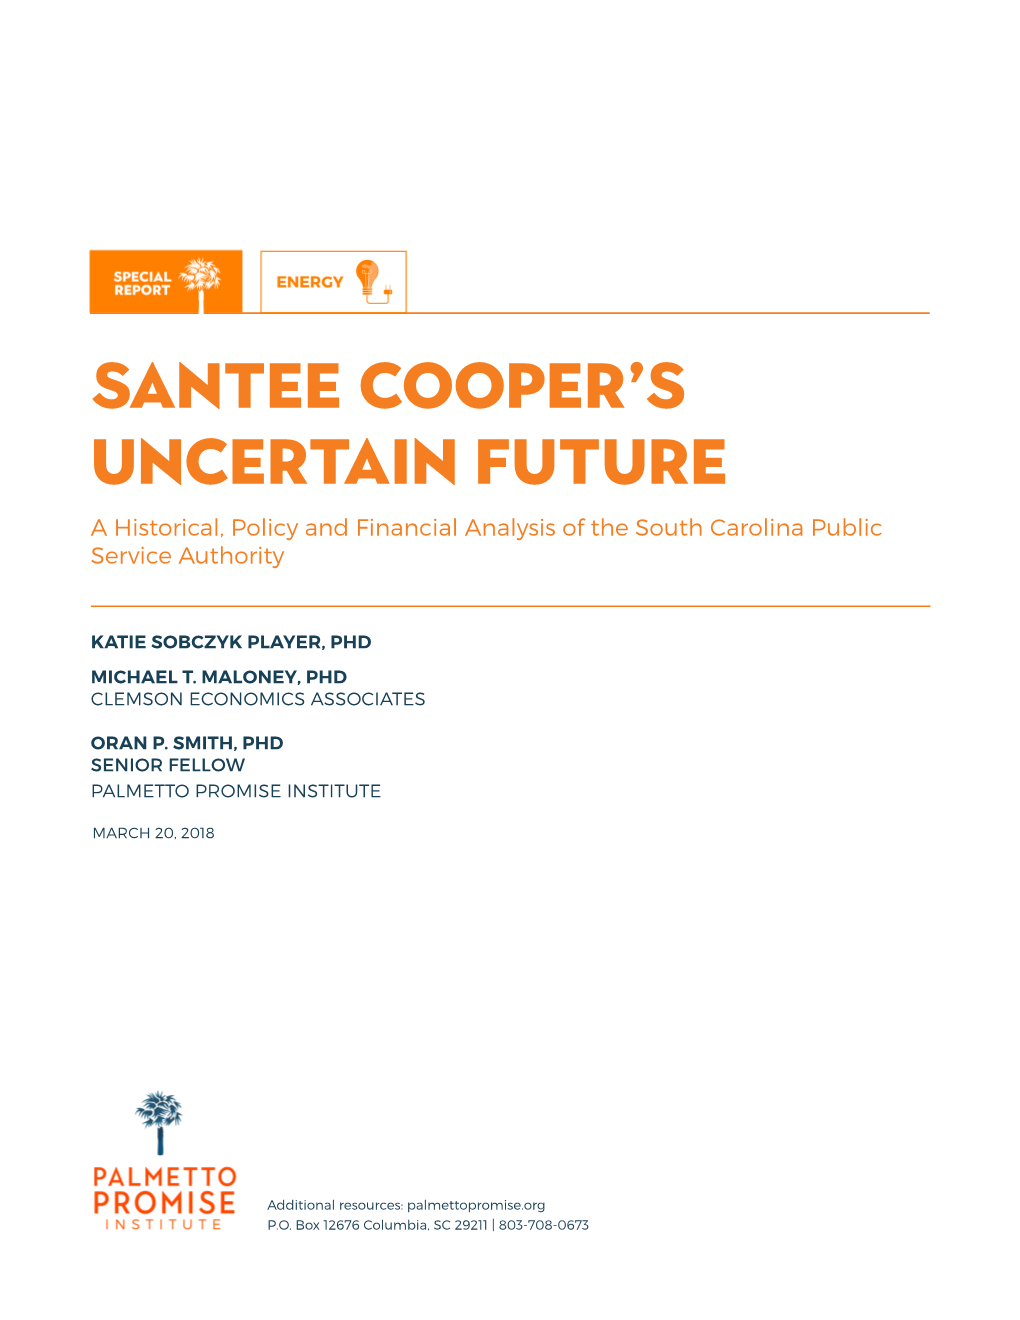 Santee Cooper's Uncertain Future